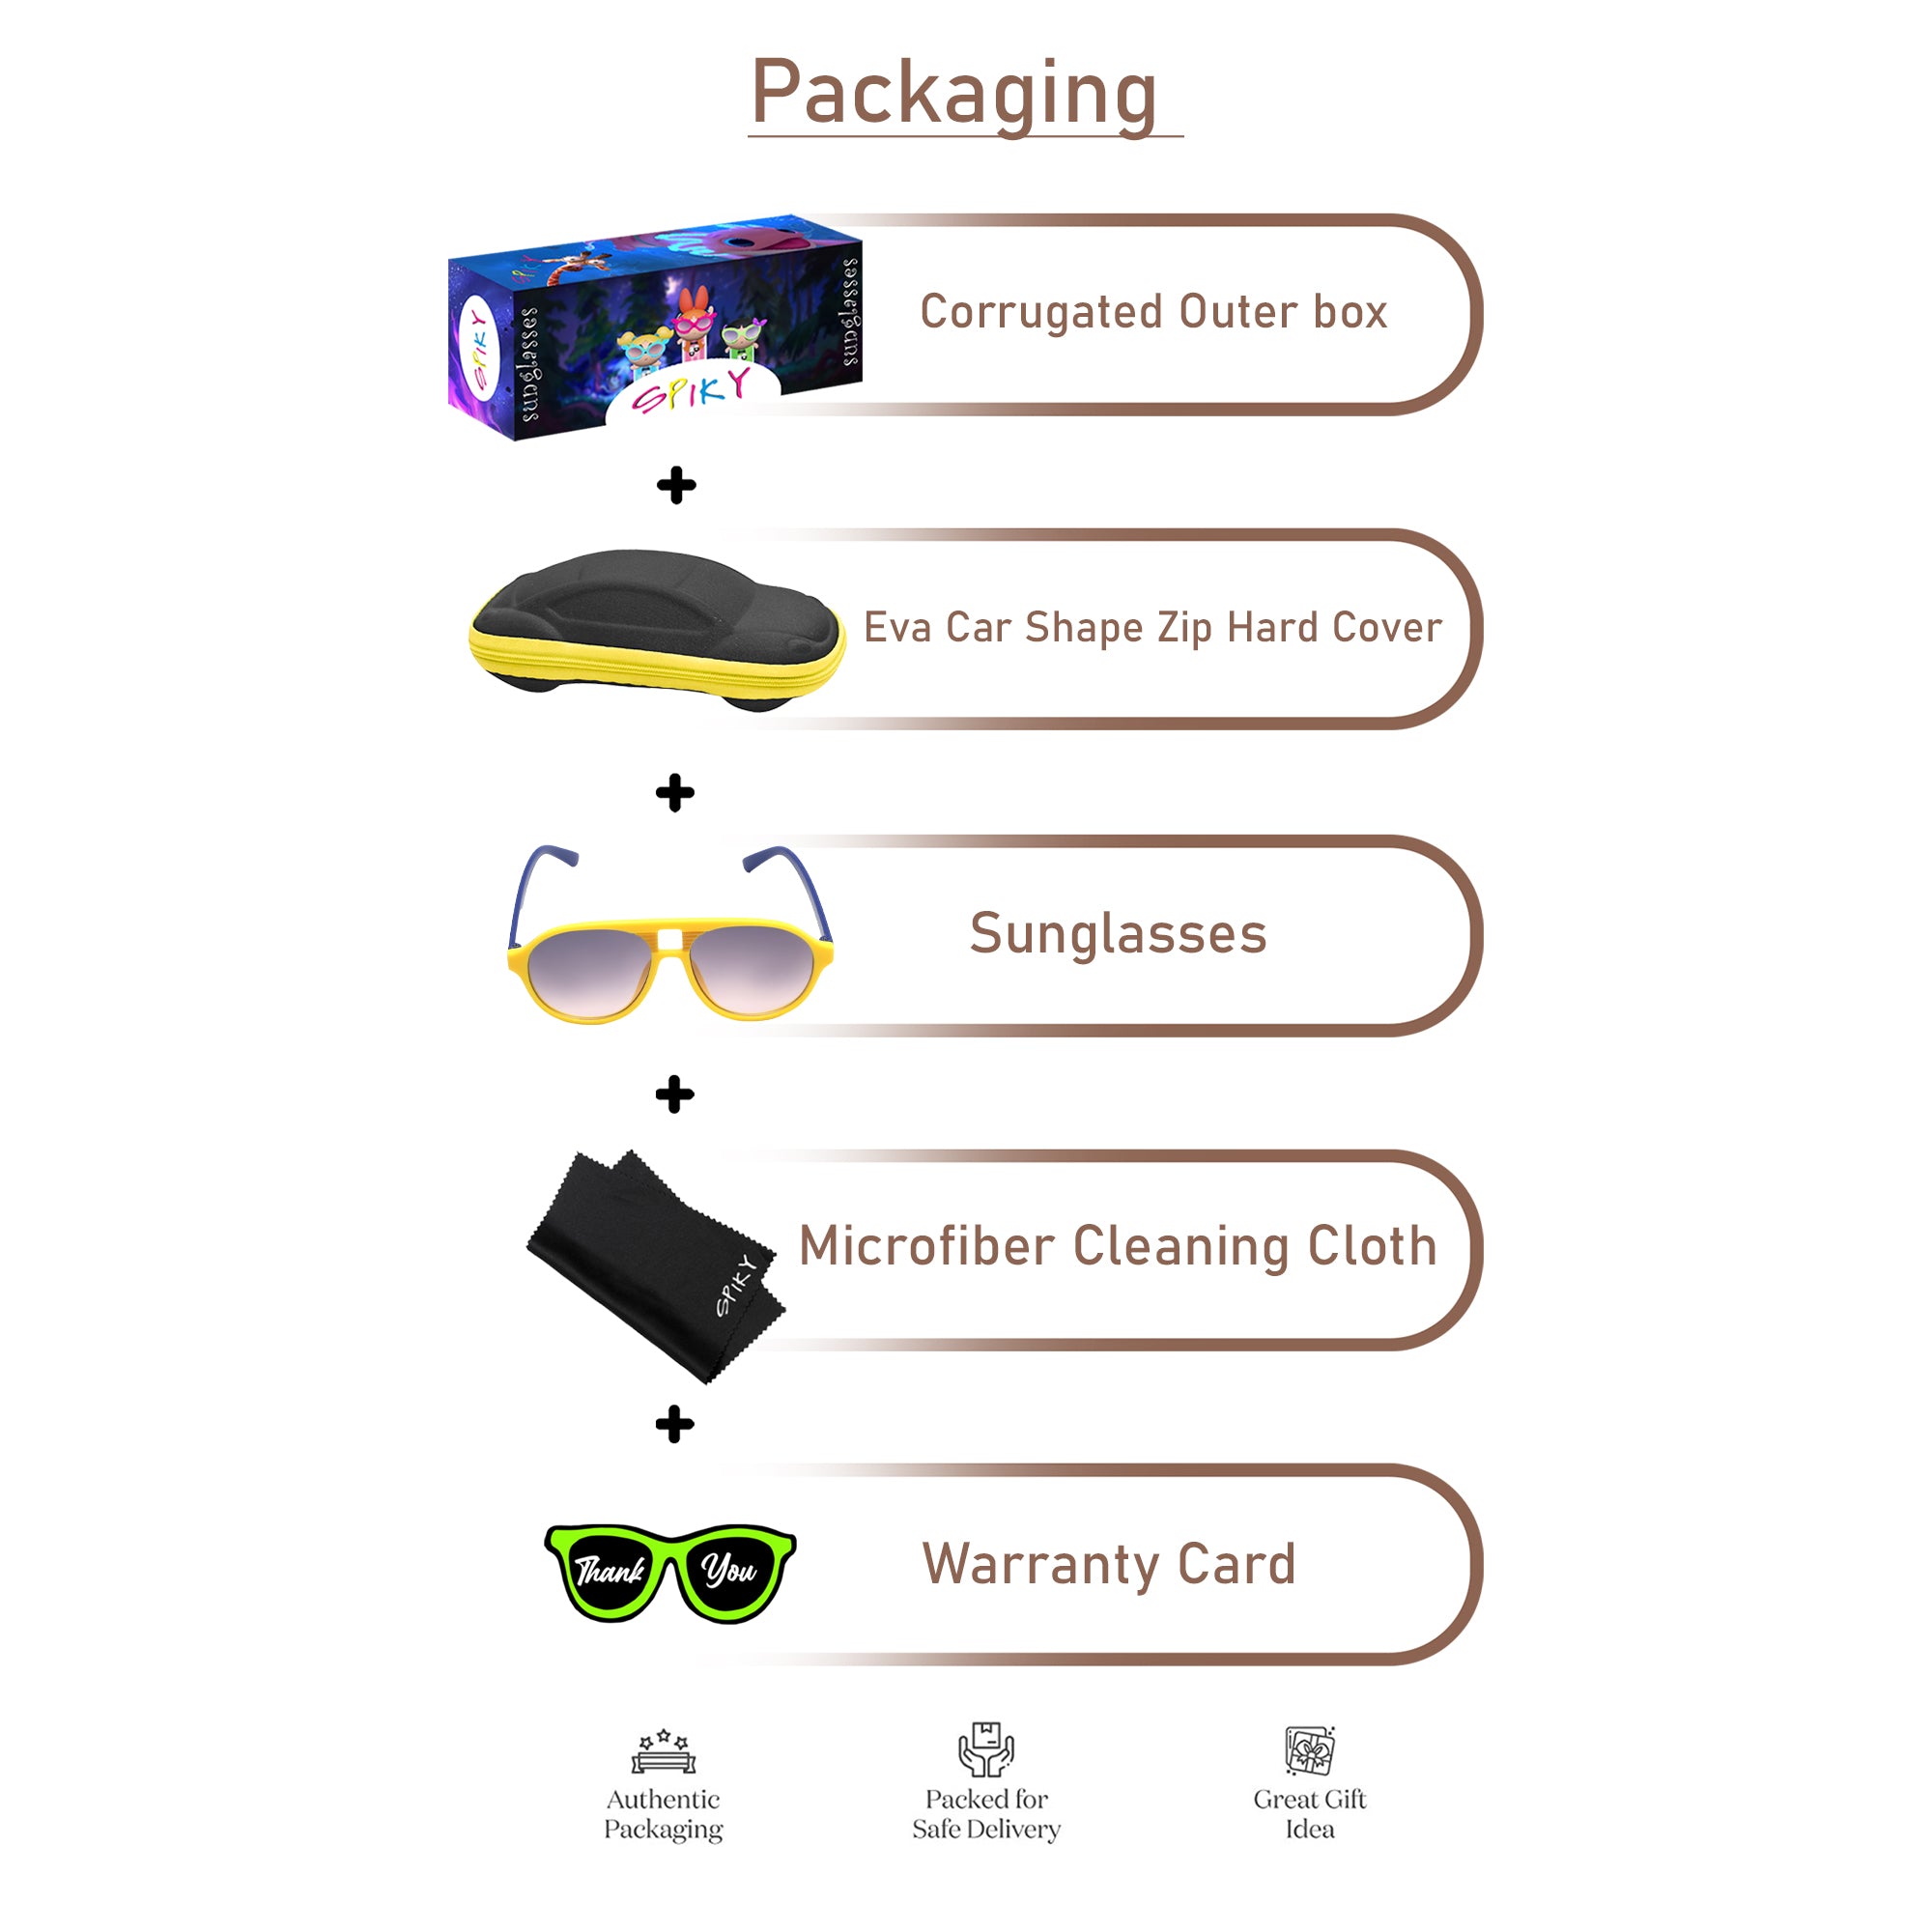 Spiky Yellow and Blue Aviator Sunglasses – UV Protection